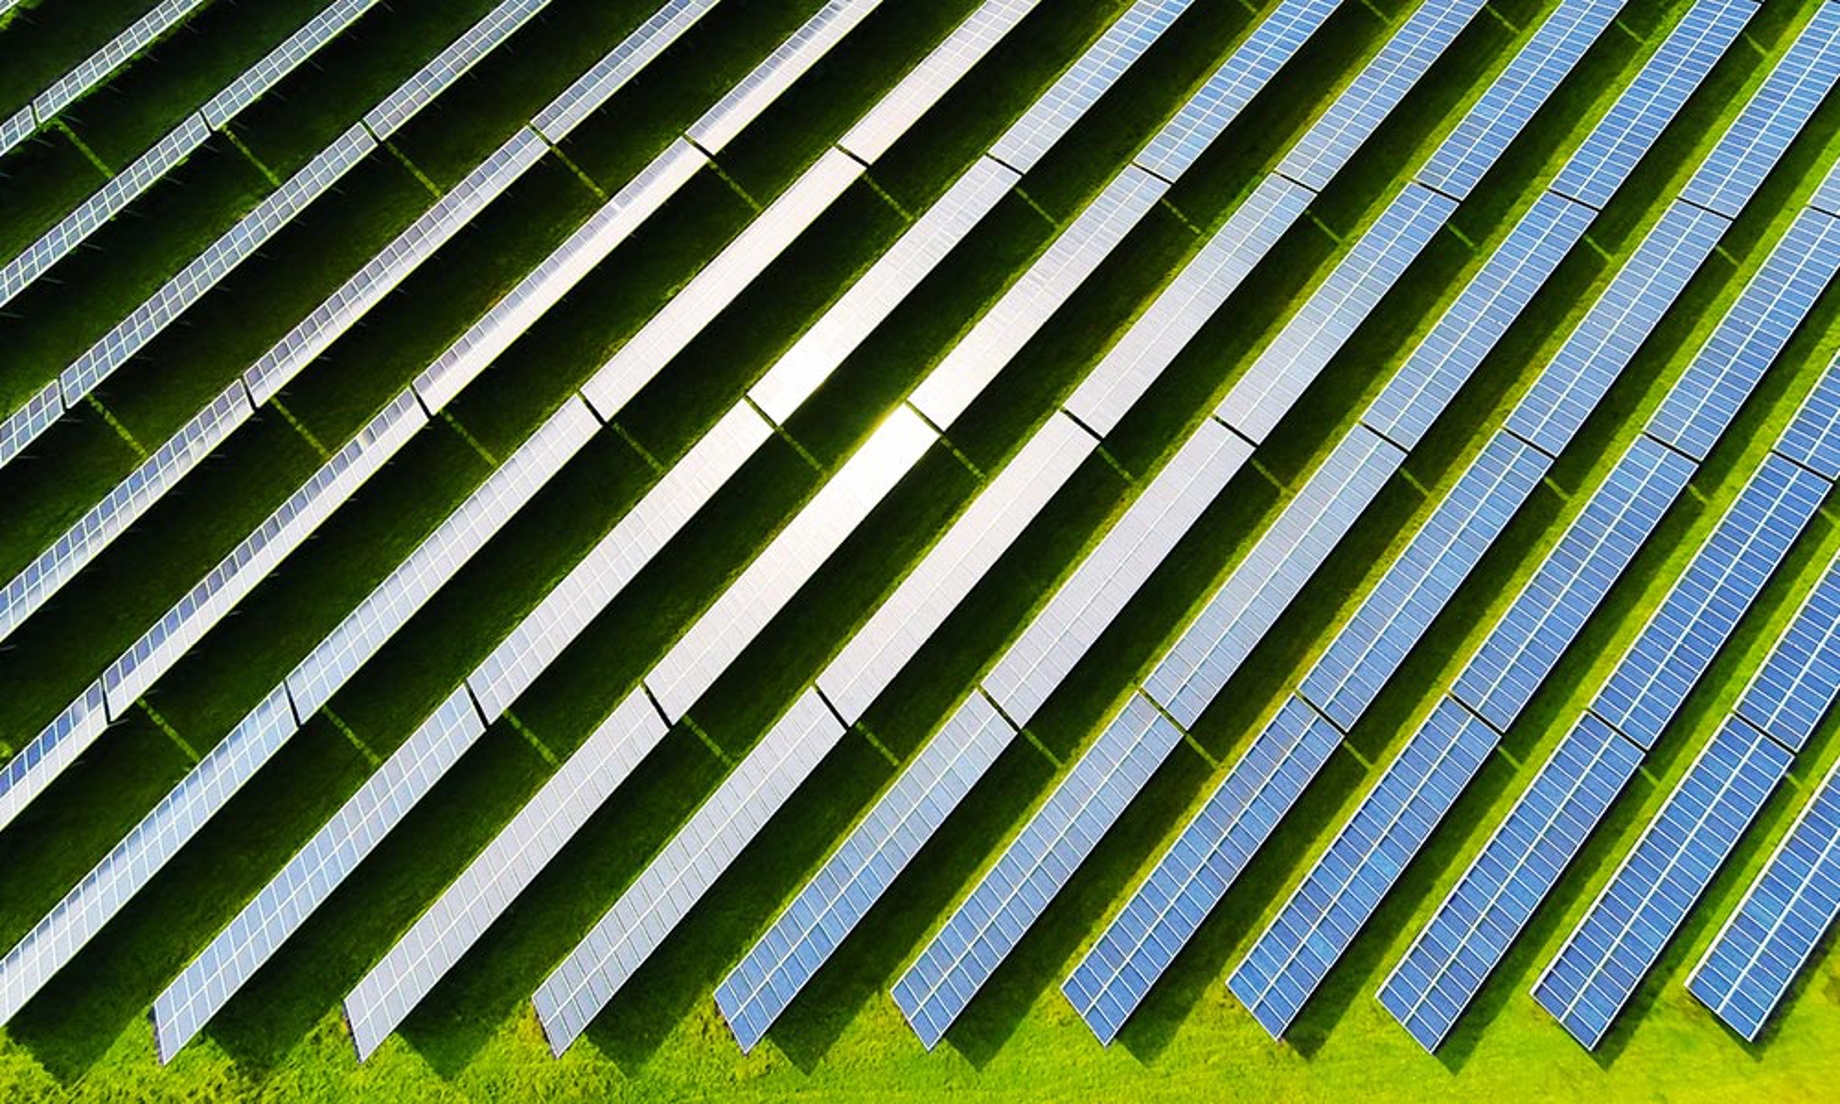 Solar panel farm